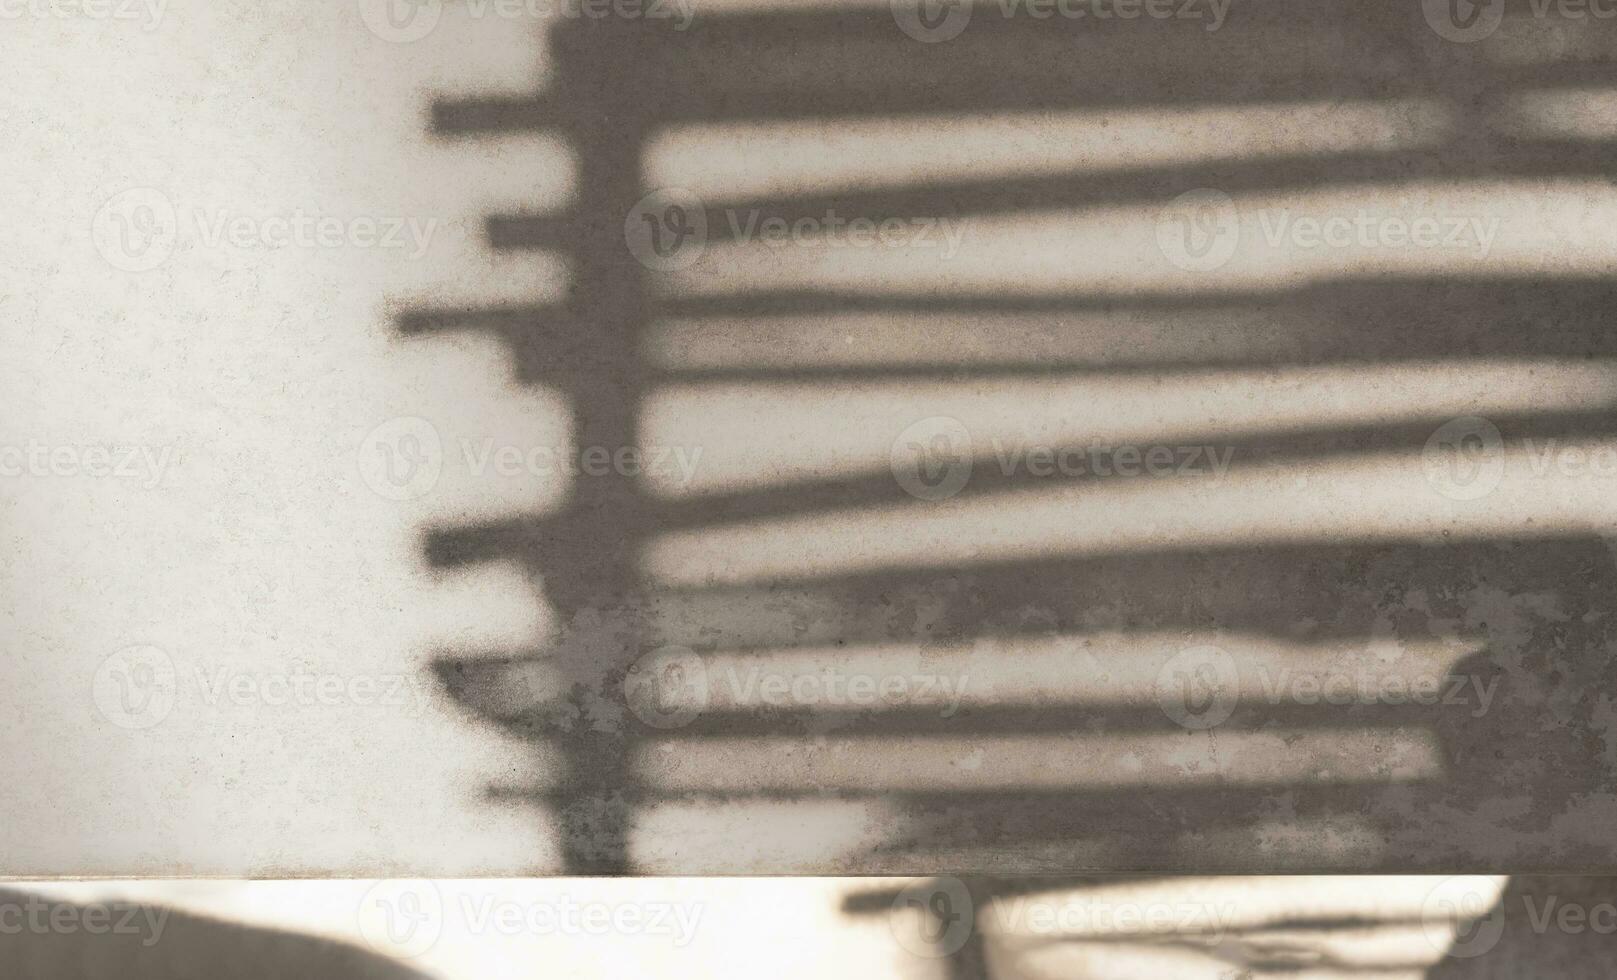 antecedentes beige estudio pared superficie textura con ligero y sombra en cemento piso fondo,vacío cocina monitor habitación con podio o parte superior barra, telón de fondo antecedentes cosmético producto presentación foto